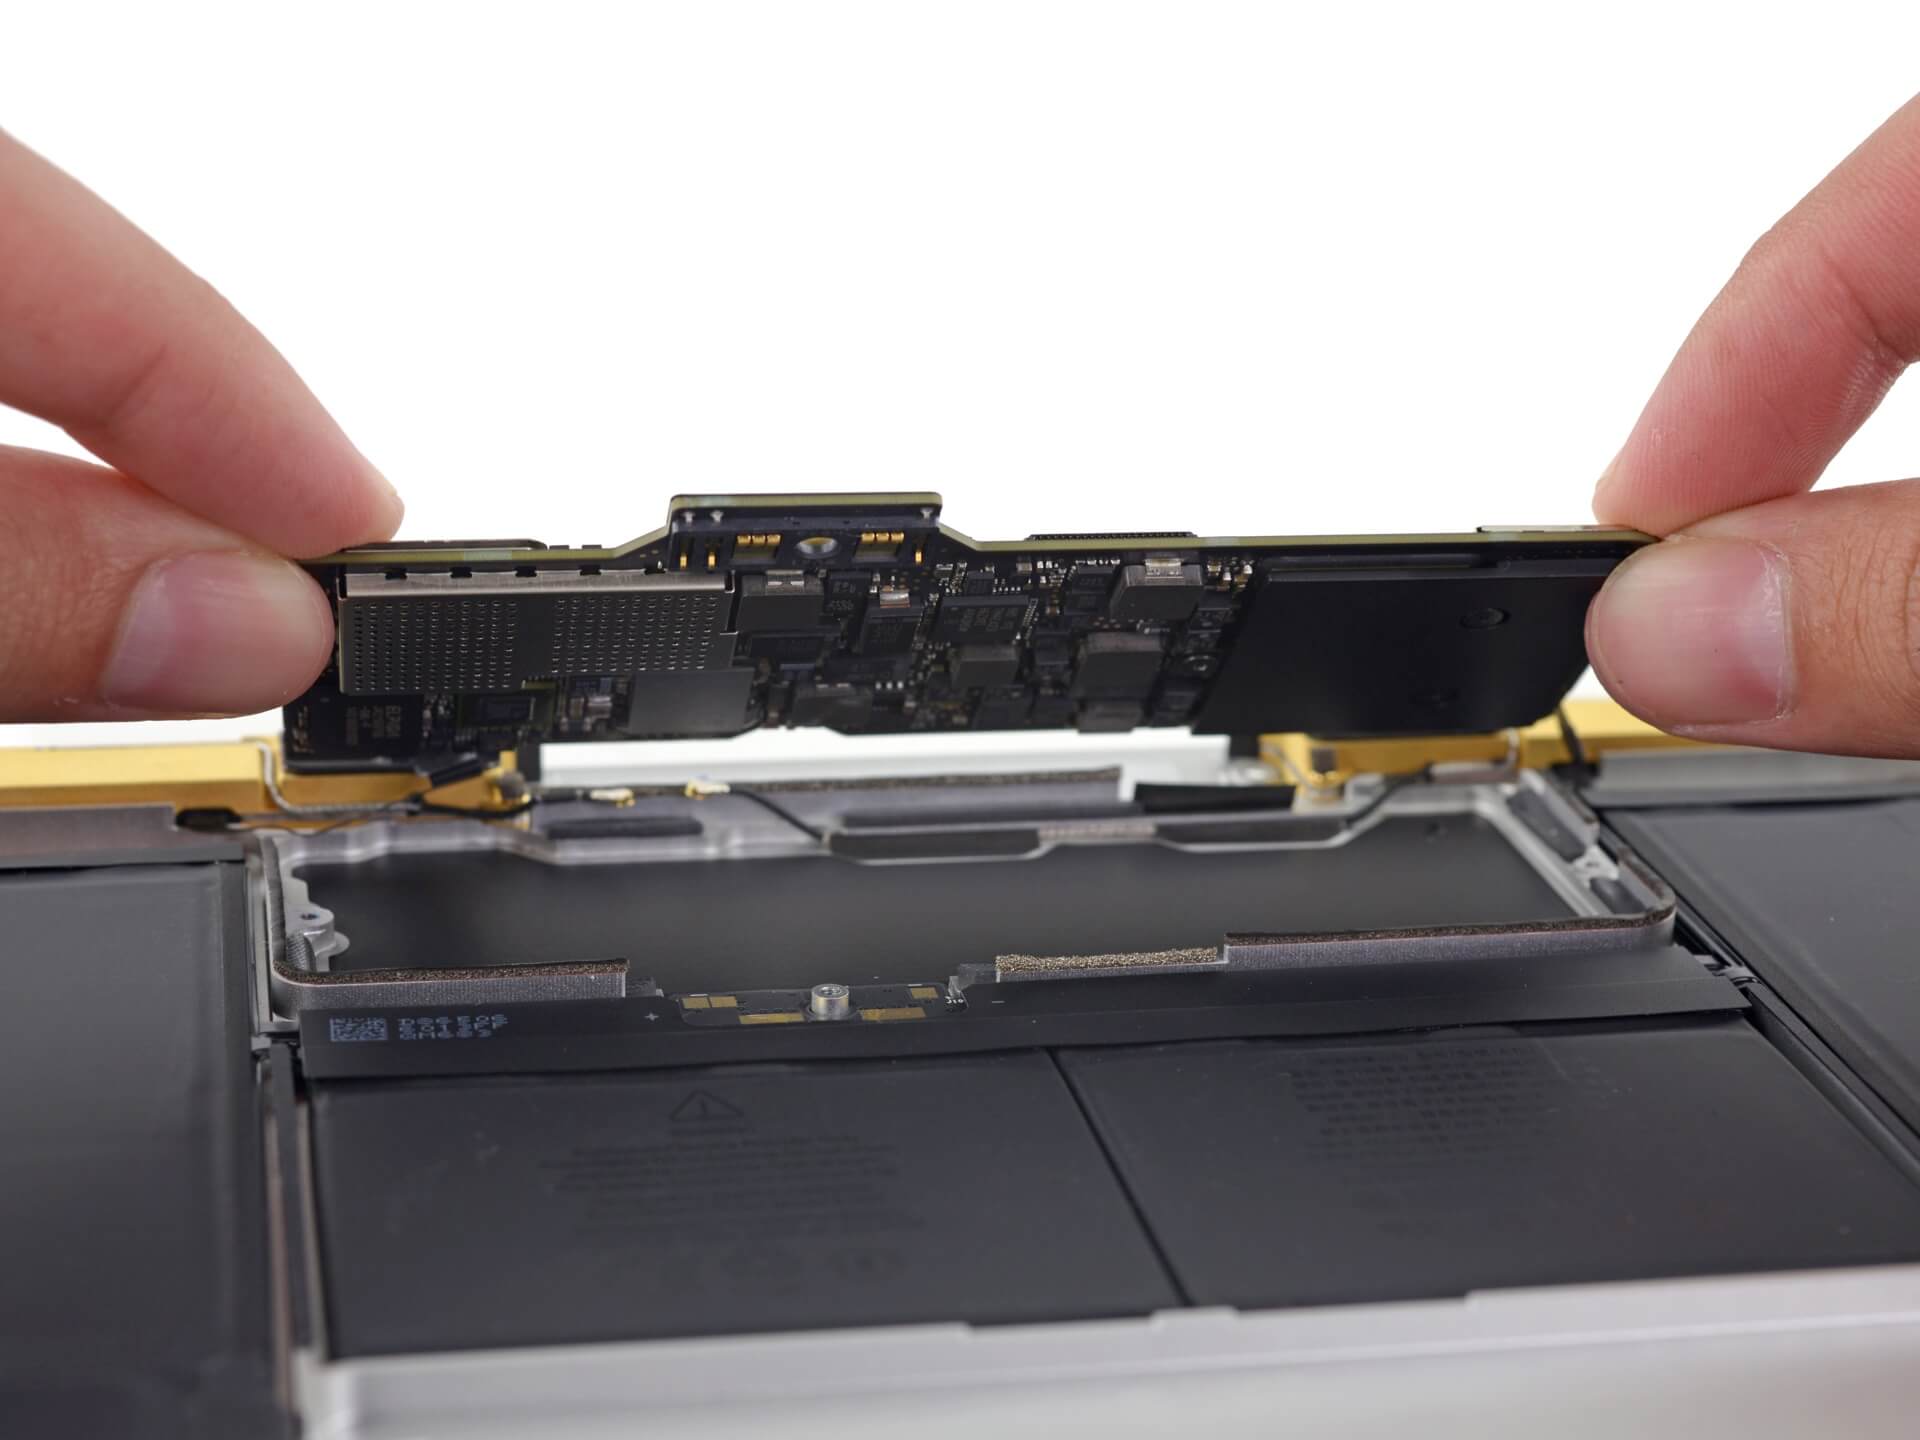 Uue MacBook - iFixiti lammutamine